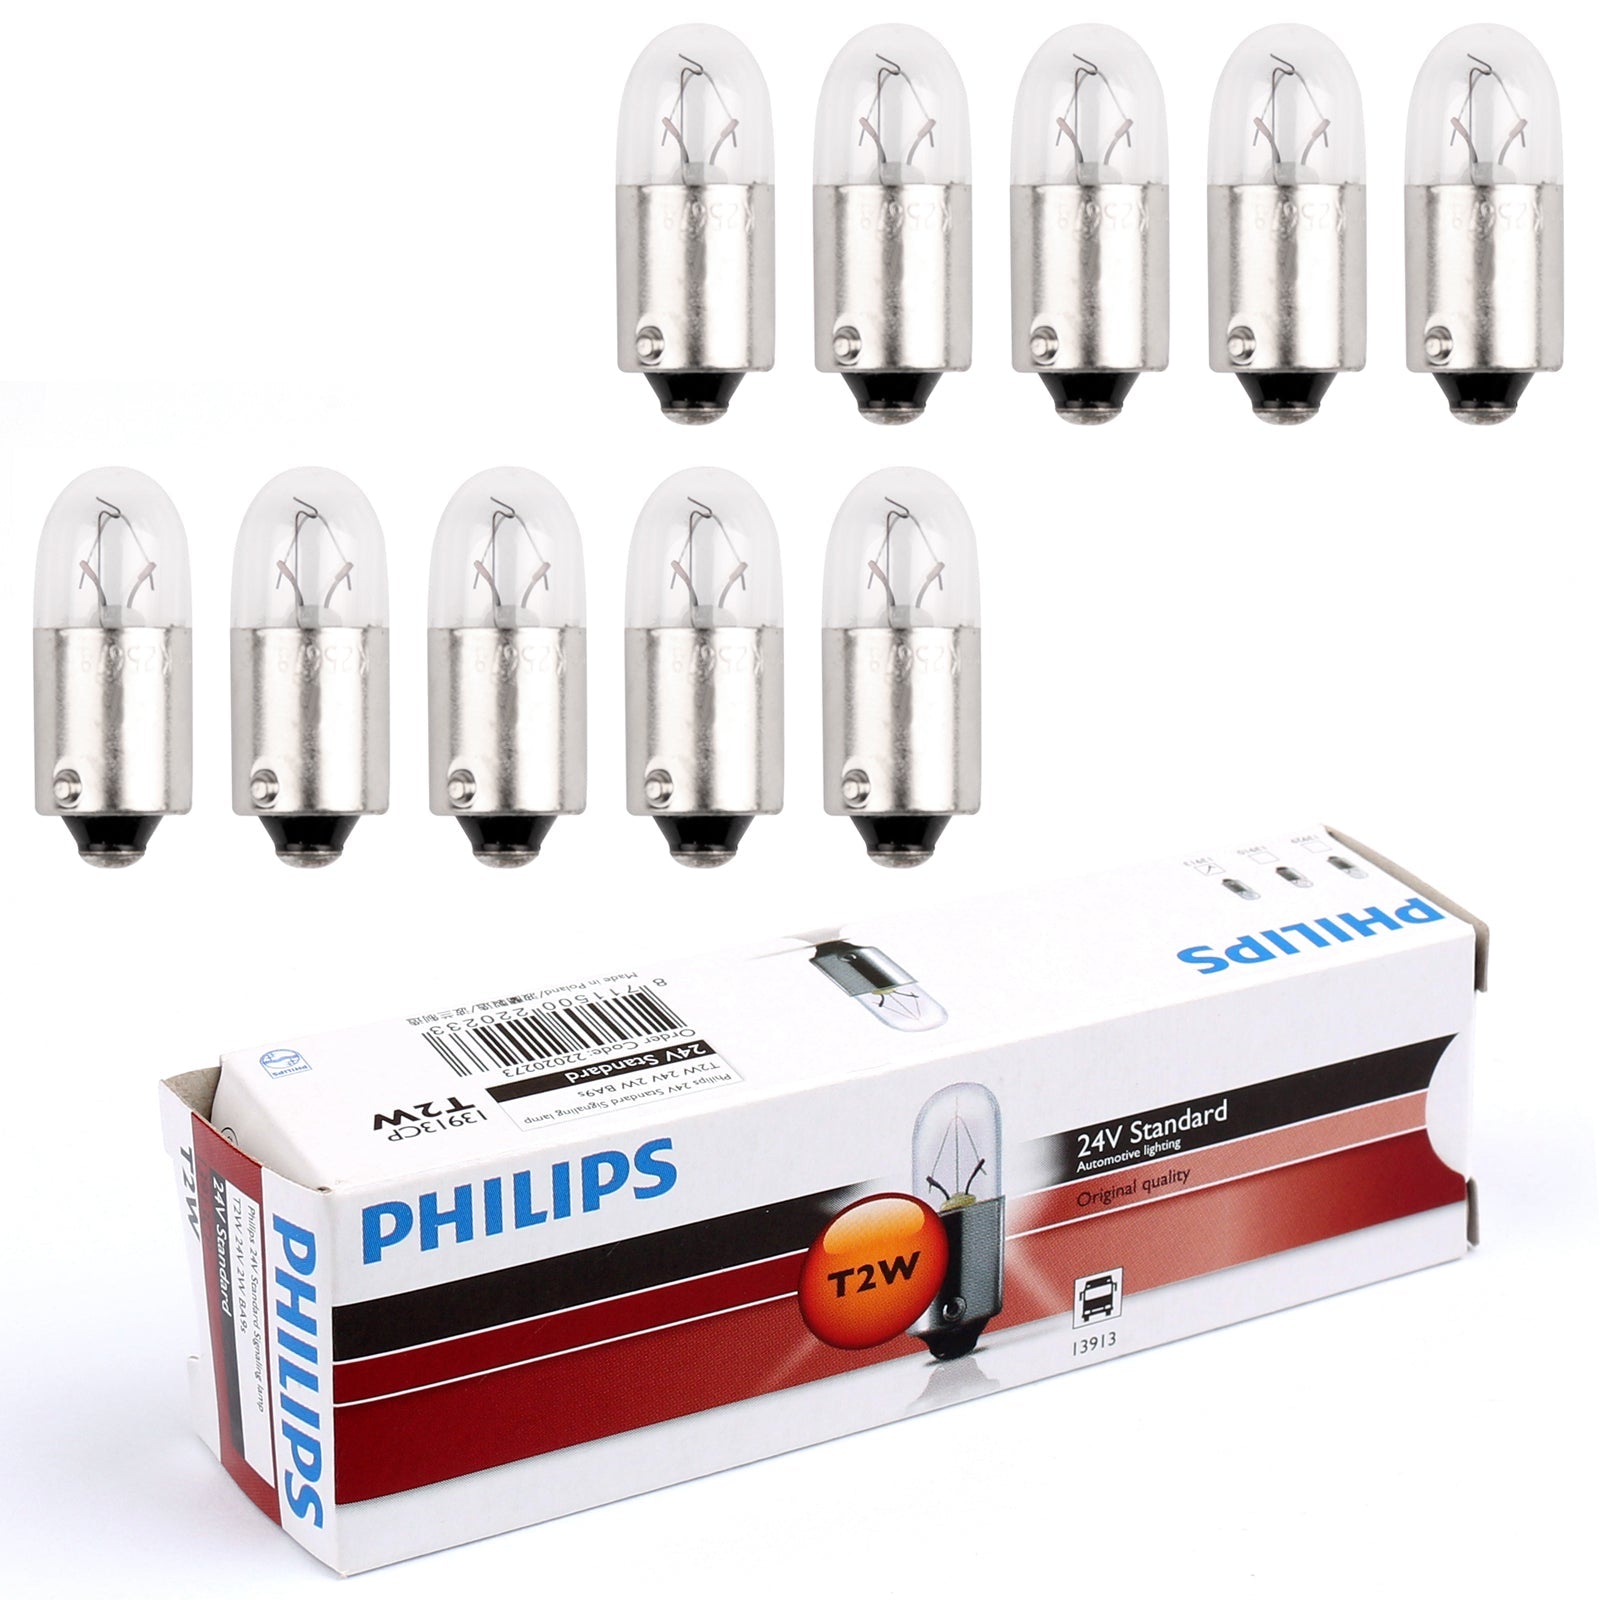 10pcs PHILIPS 13913 24V2W T2W BA9s 3200K Standard Signaling Lamp Bulbs Generic